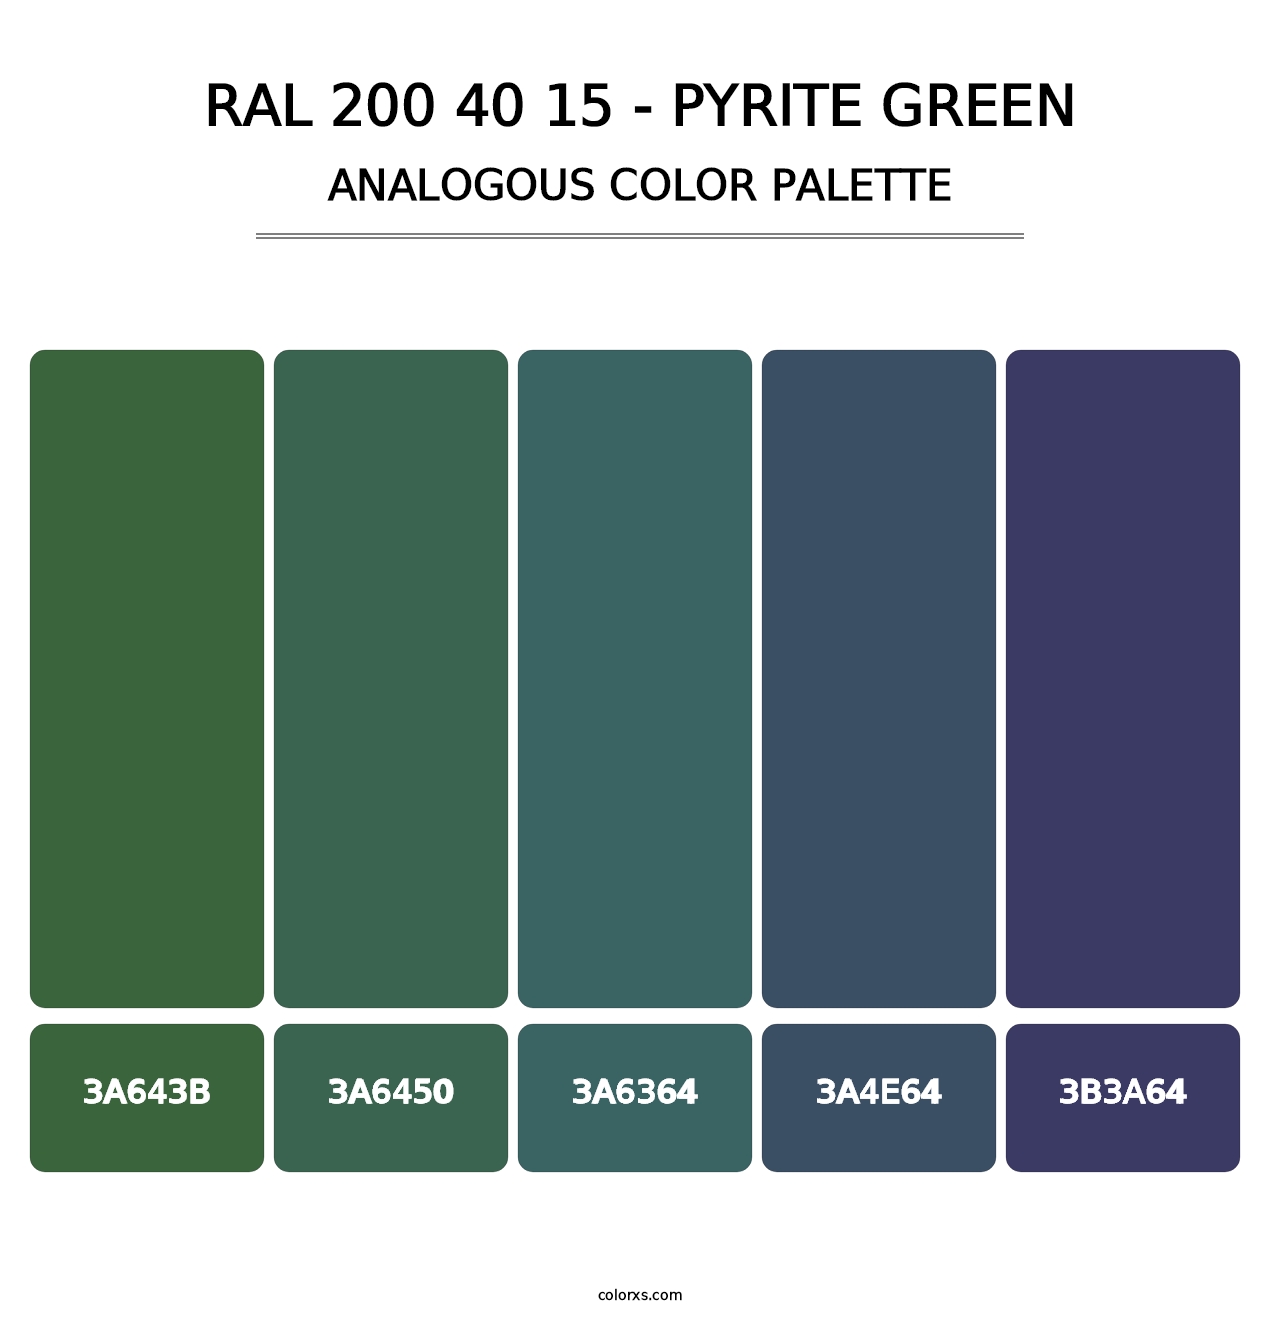 RAL 200 40 15 - Pyrite Green - Analogous Color Palette